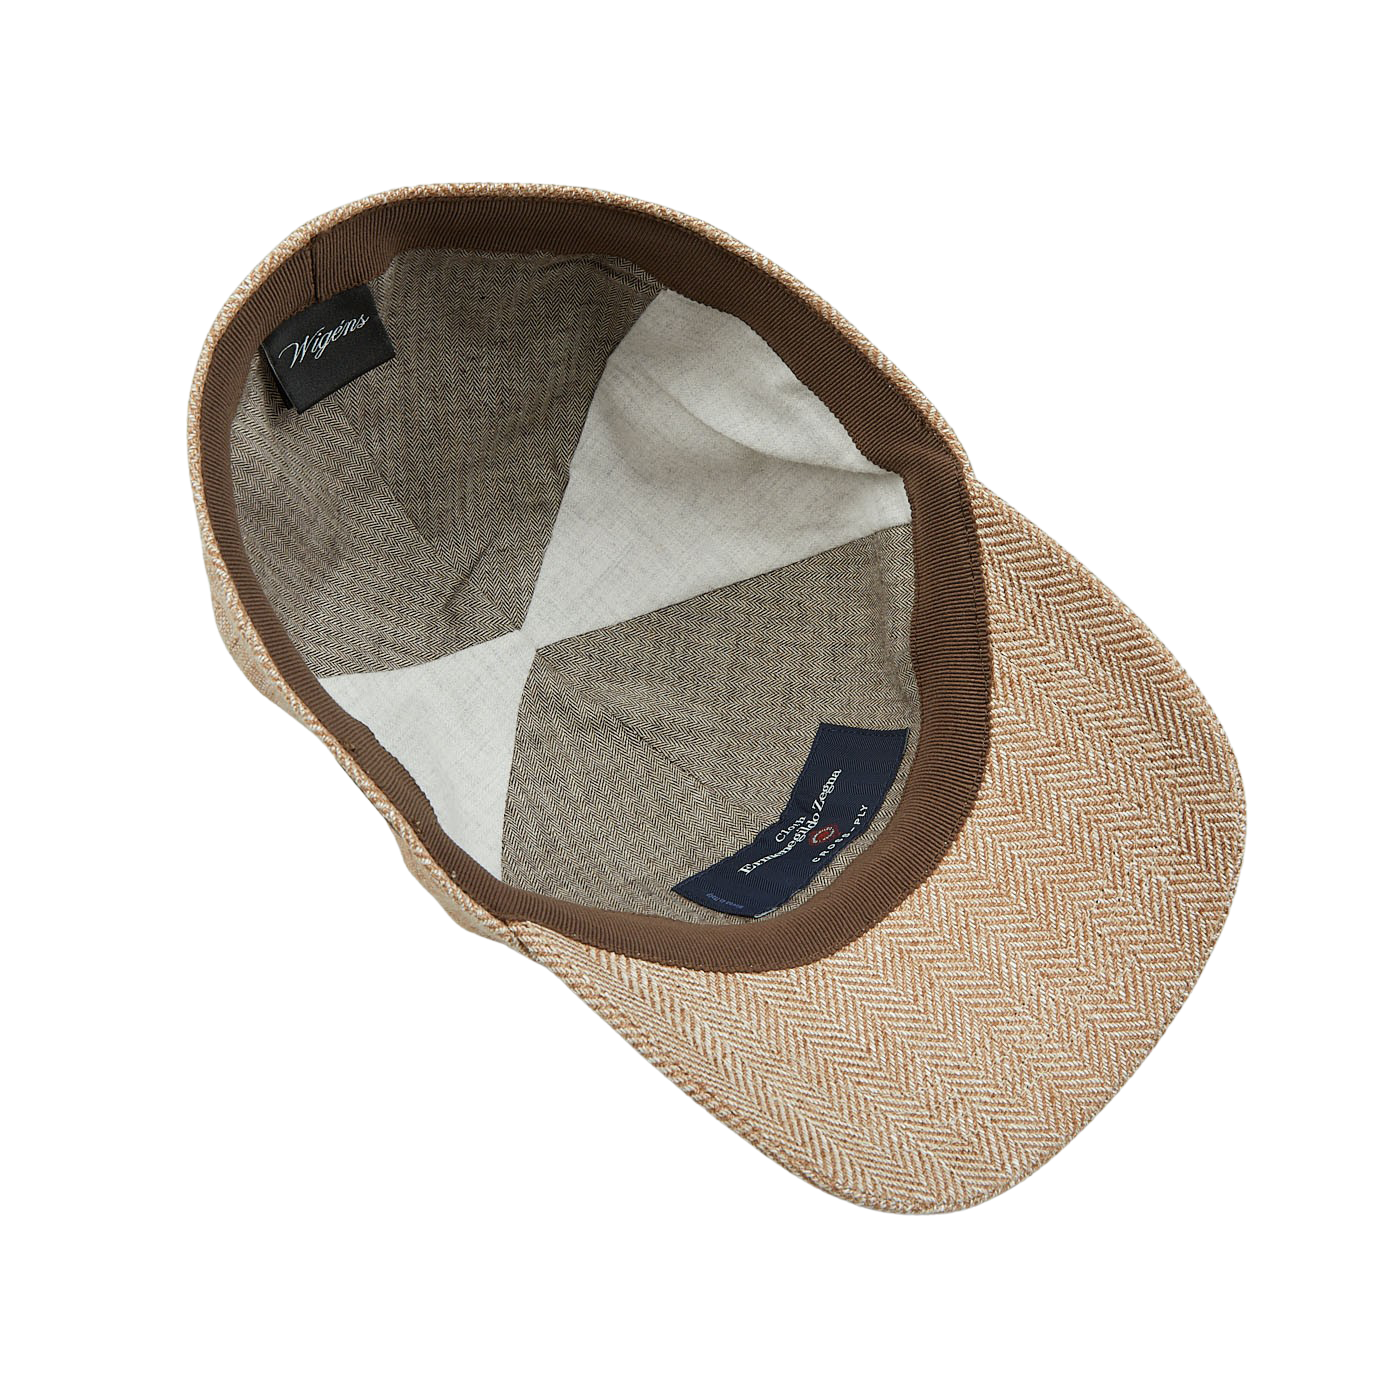 A Beige Herringbone Zegna Wool Linen Silk Wigéns Baseball Cap with a white label on it.